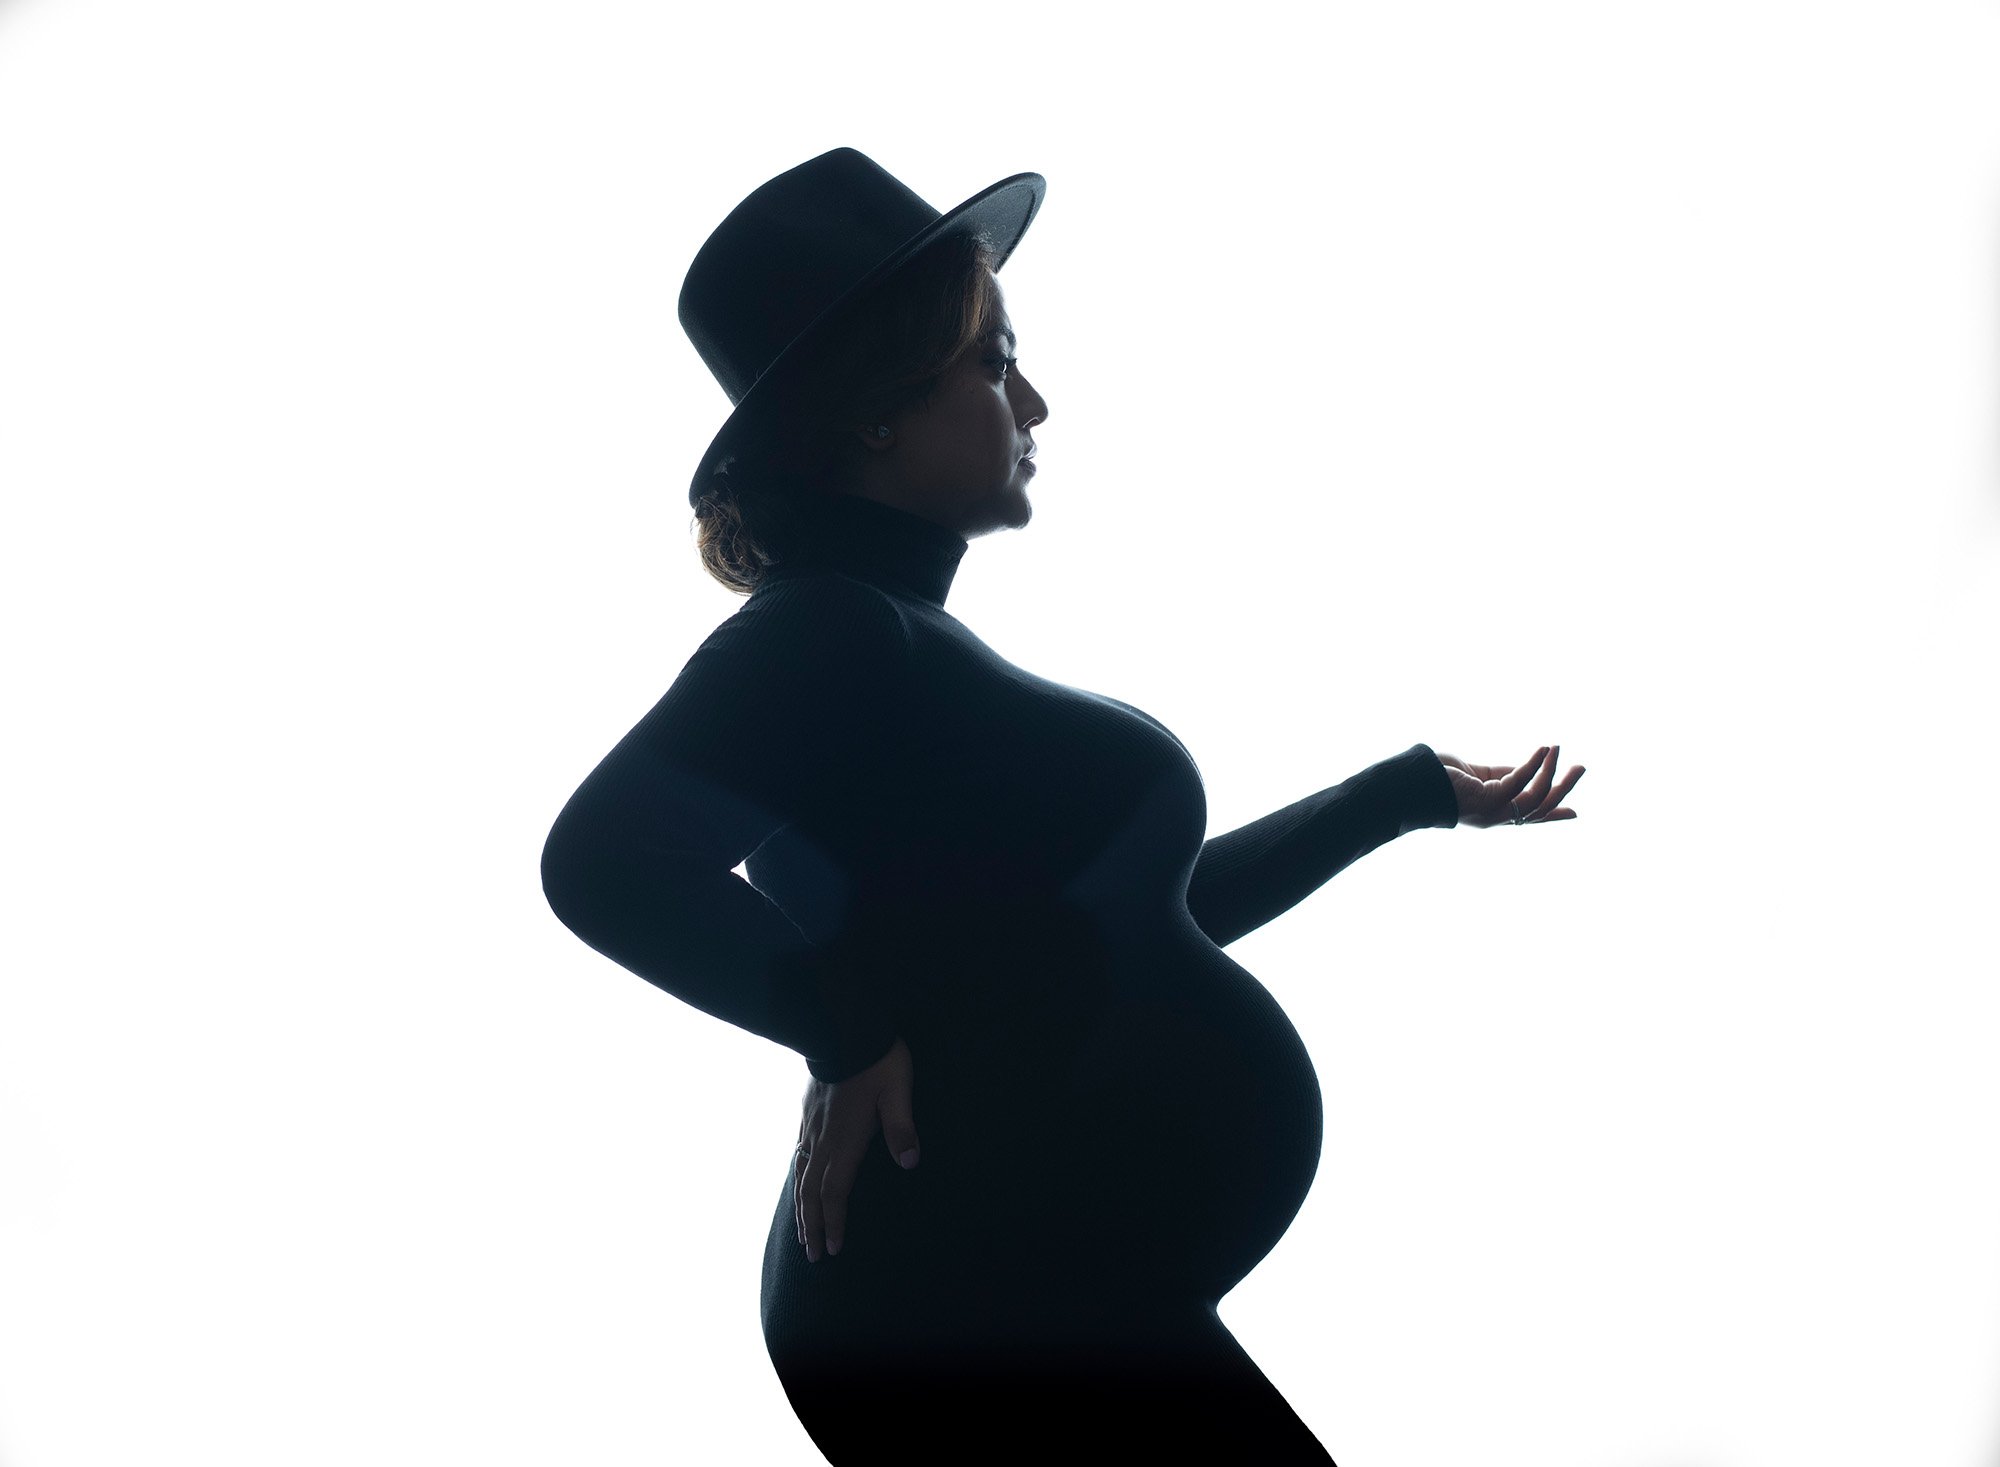 Aesthetic Maternity Photographs